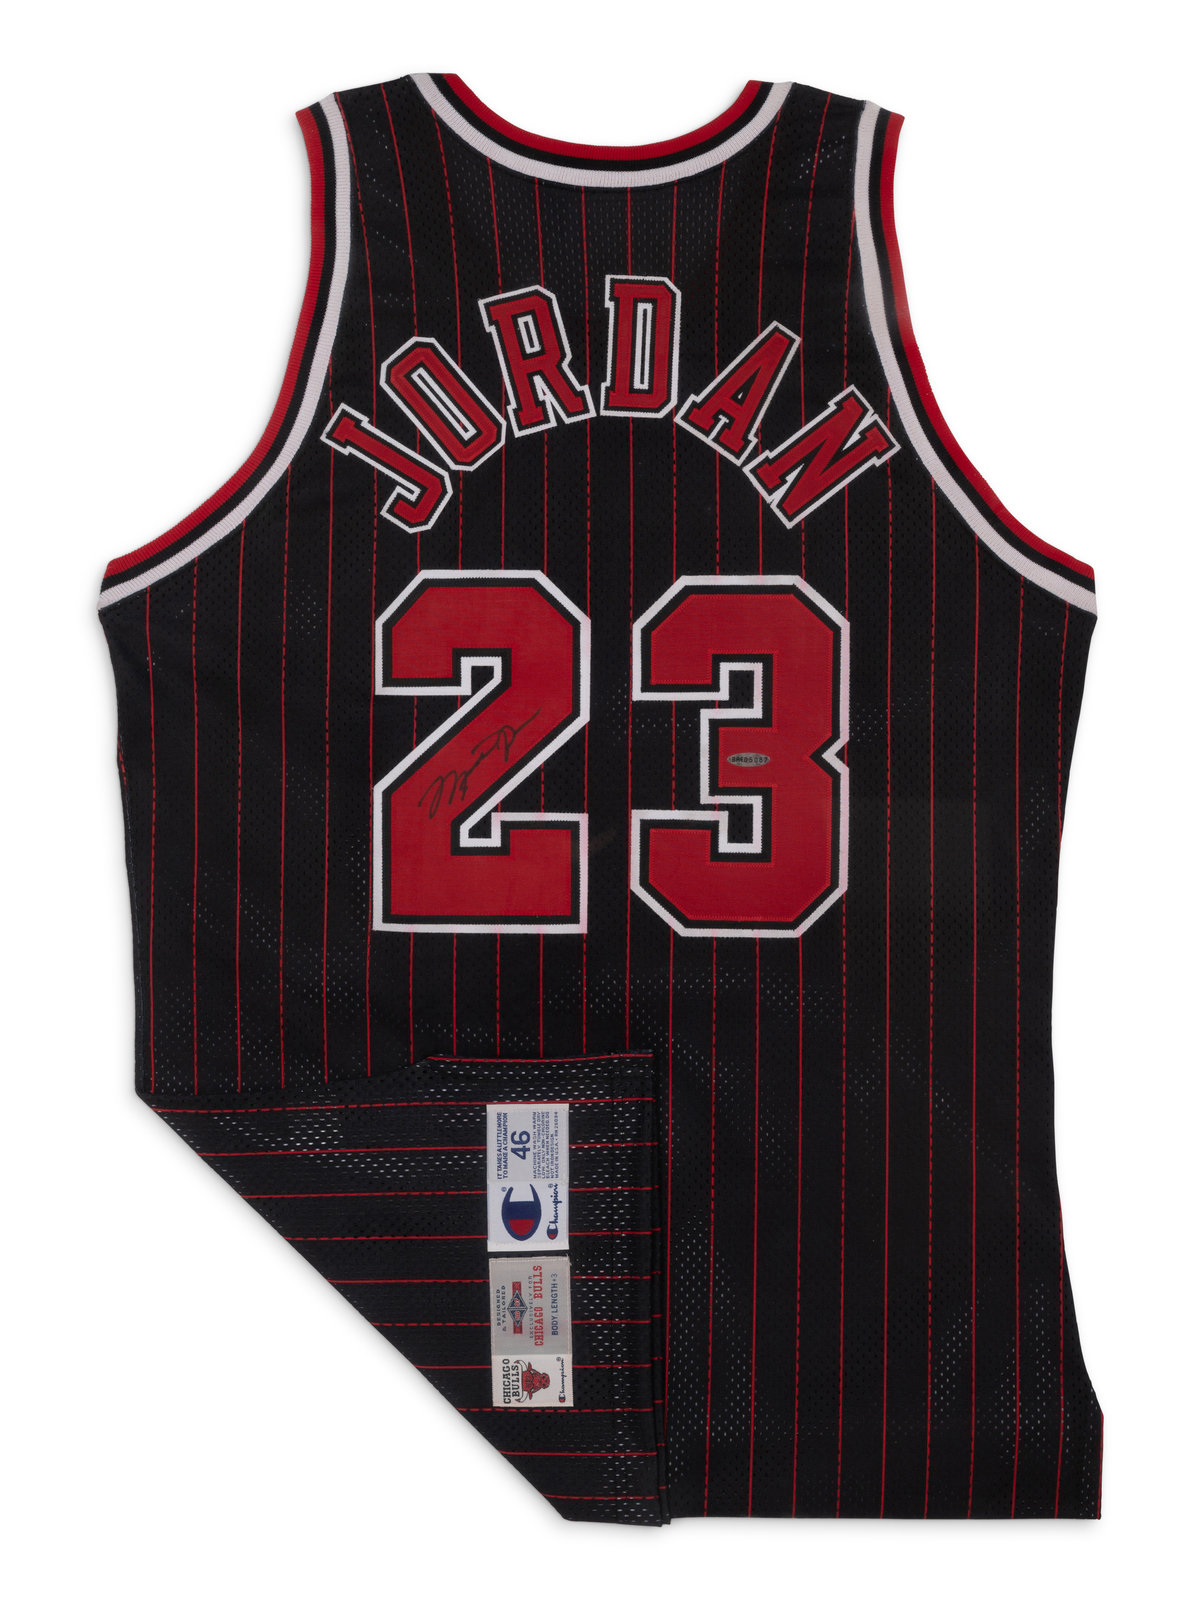 Michael Jordan Chicago Bulls Autographed White Champion Jersey - Upper Deck